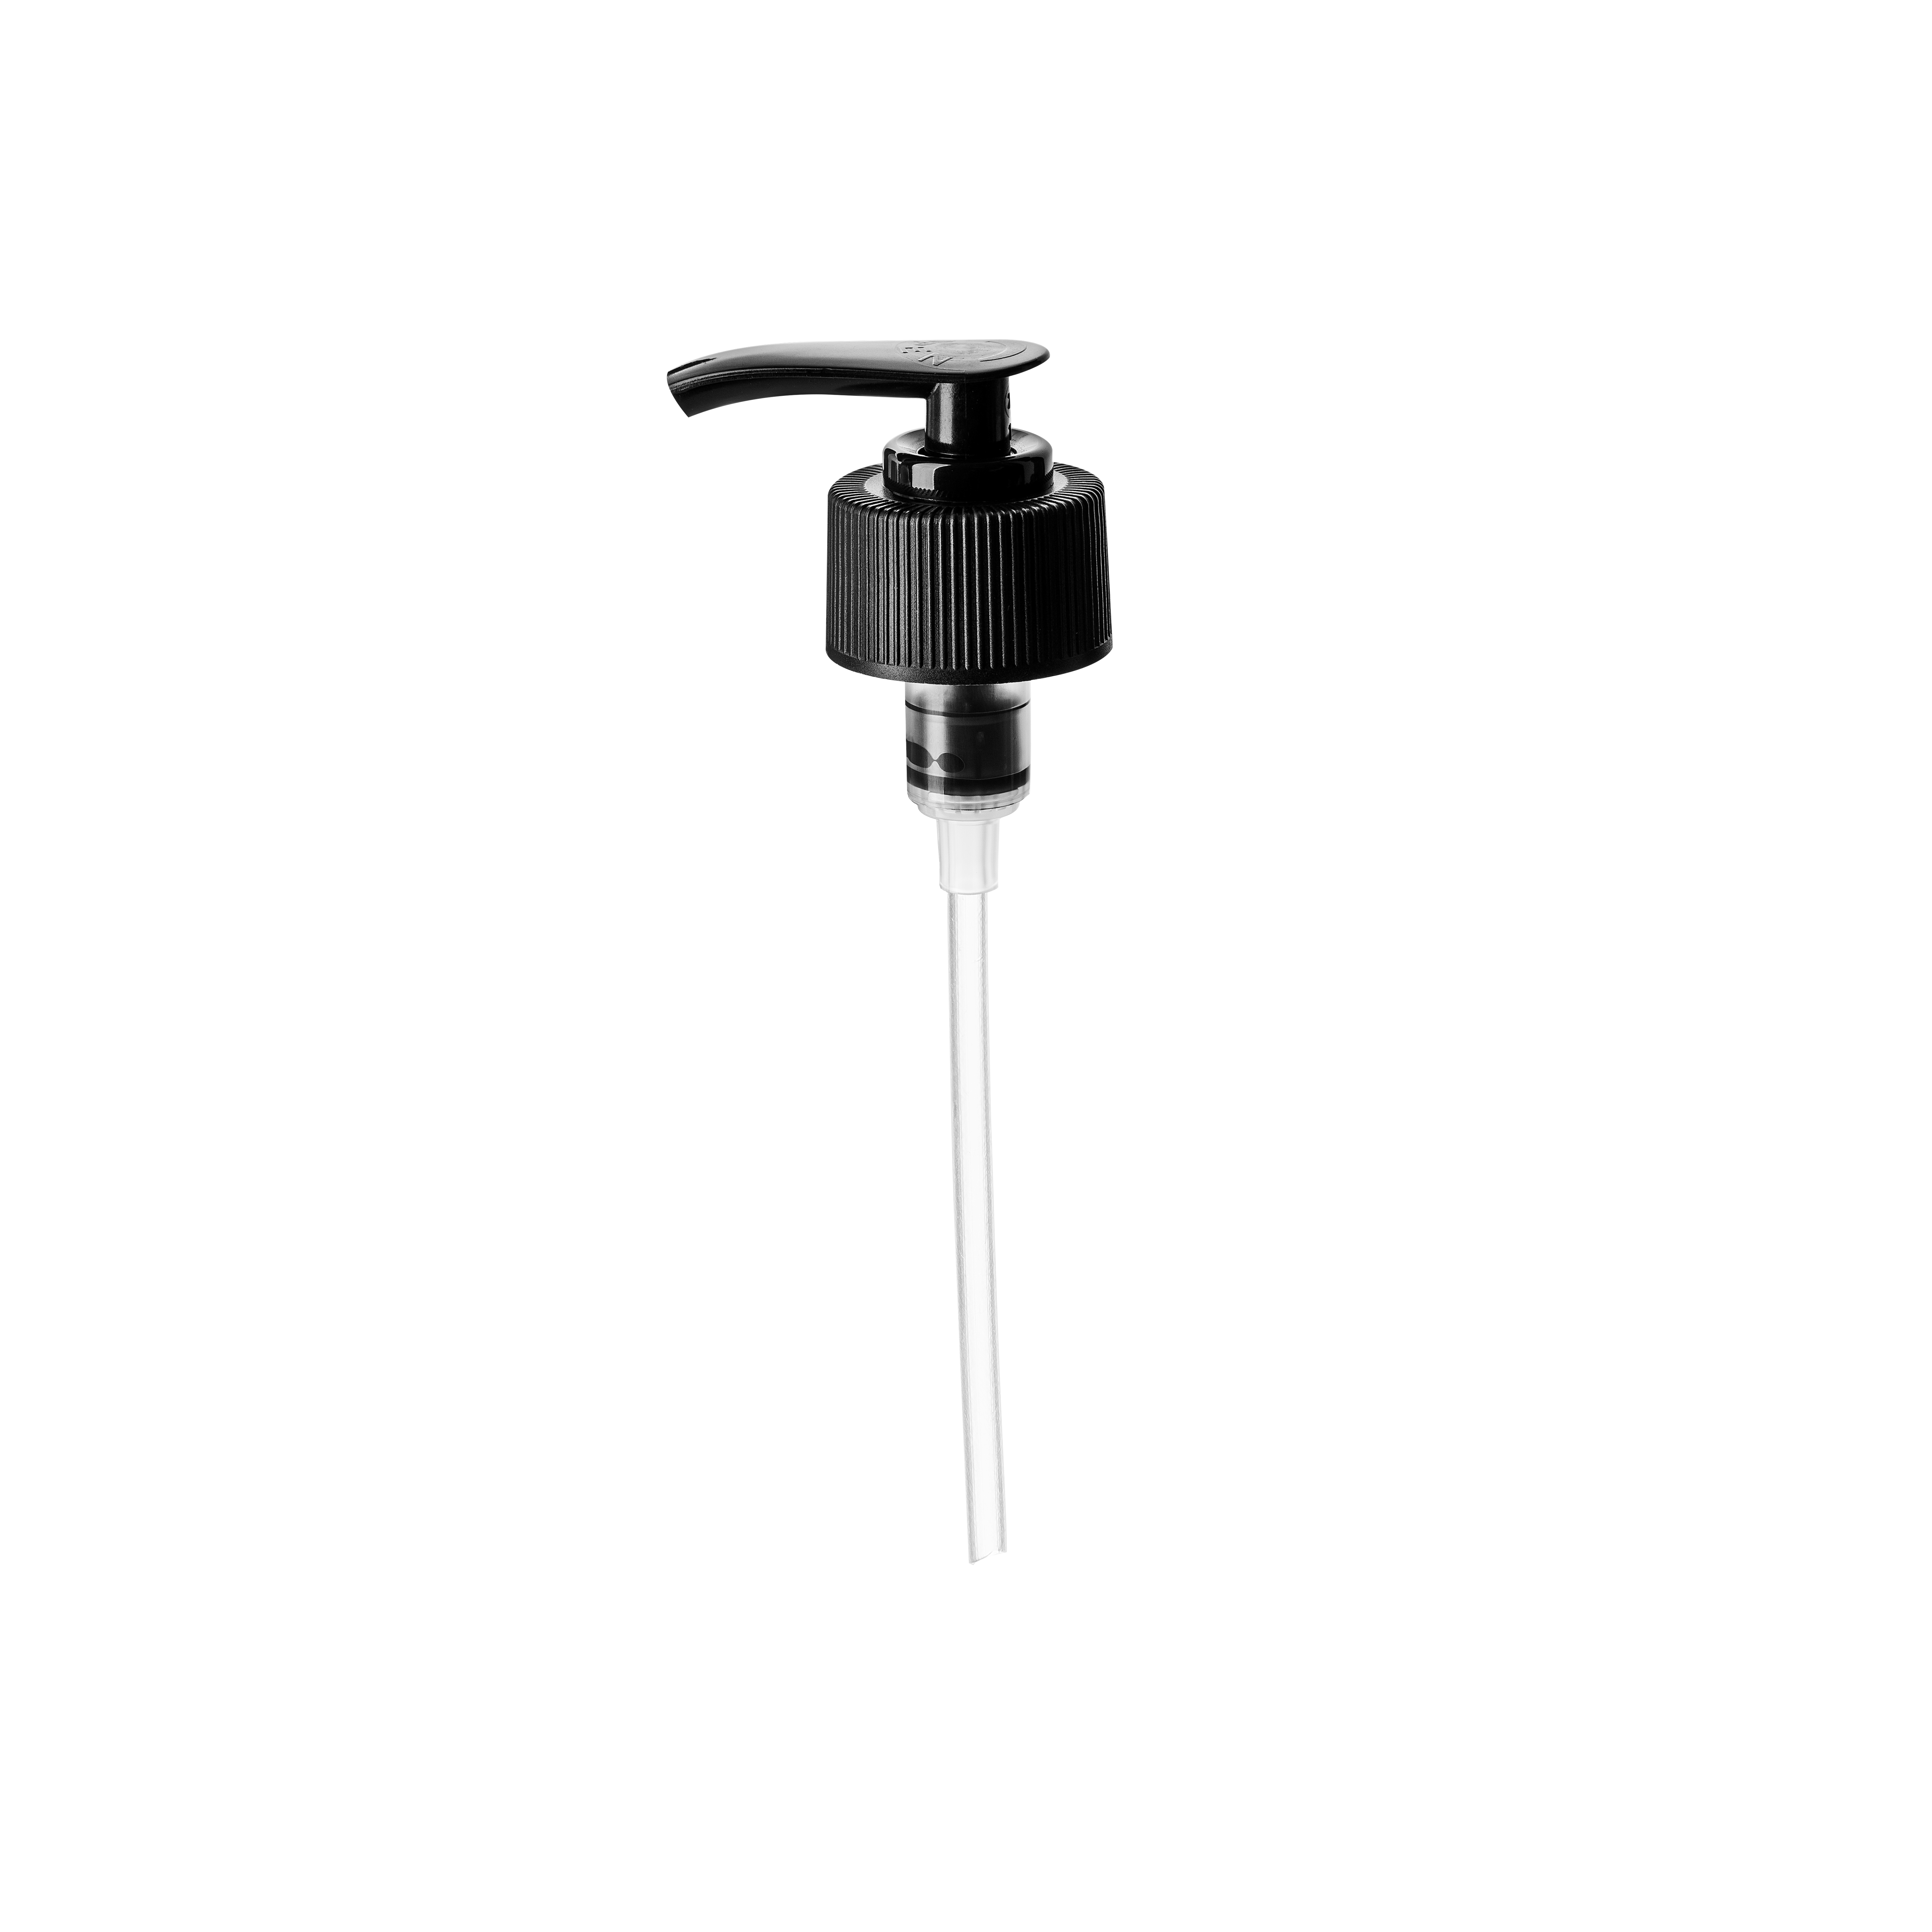 Lotion pump SD20C 28/410, PP, black ribbed, dose 2.0ml (Linden 500)